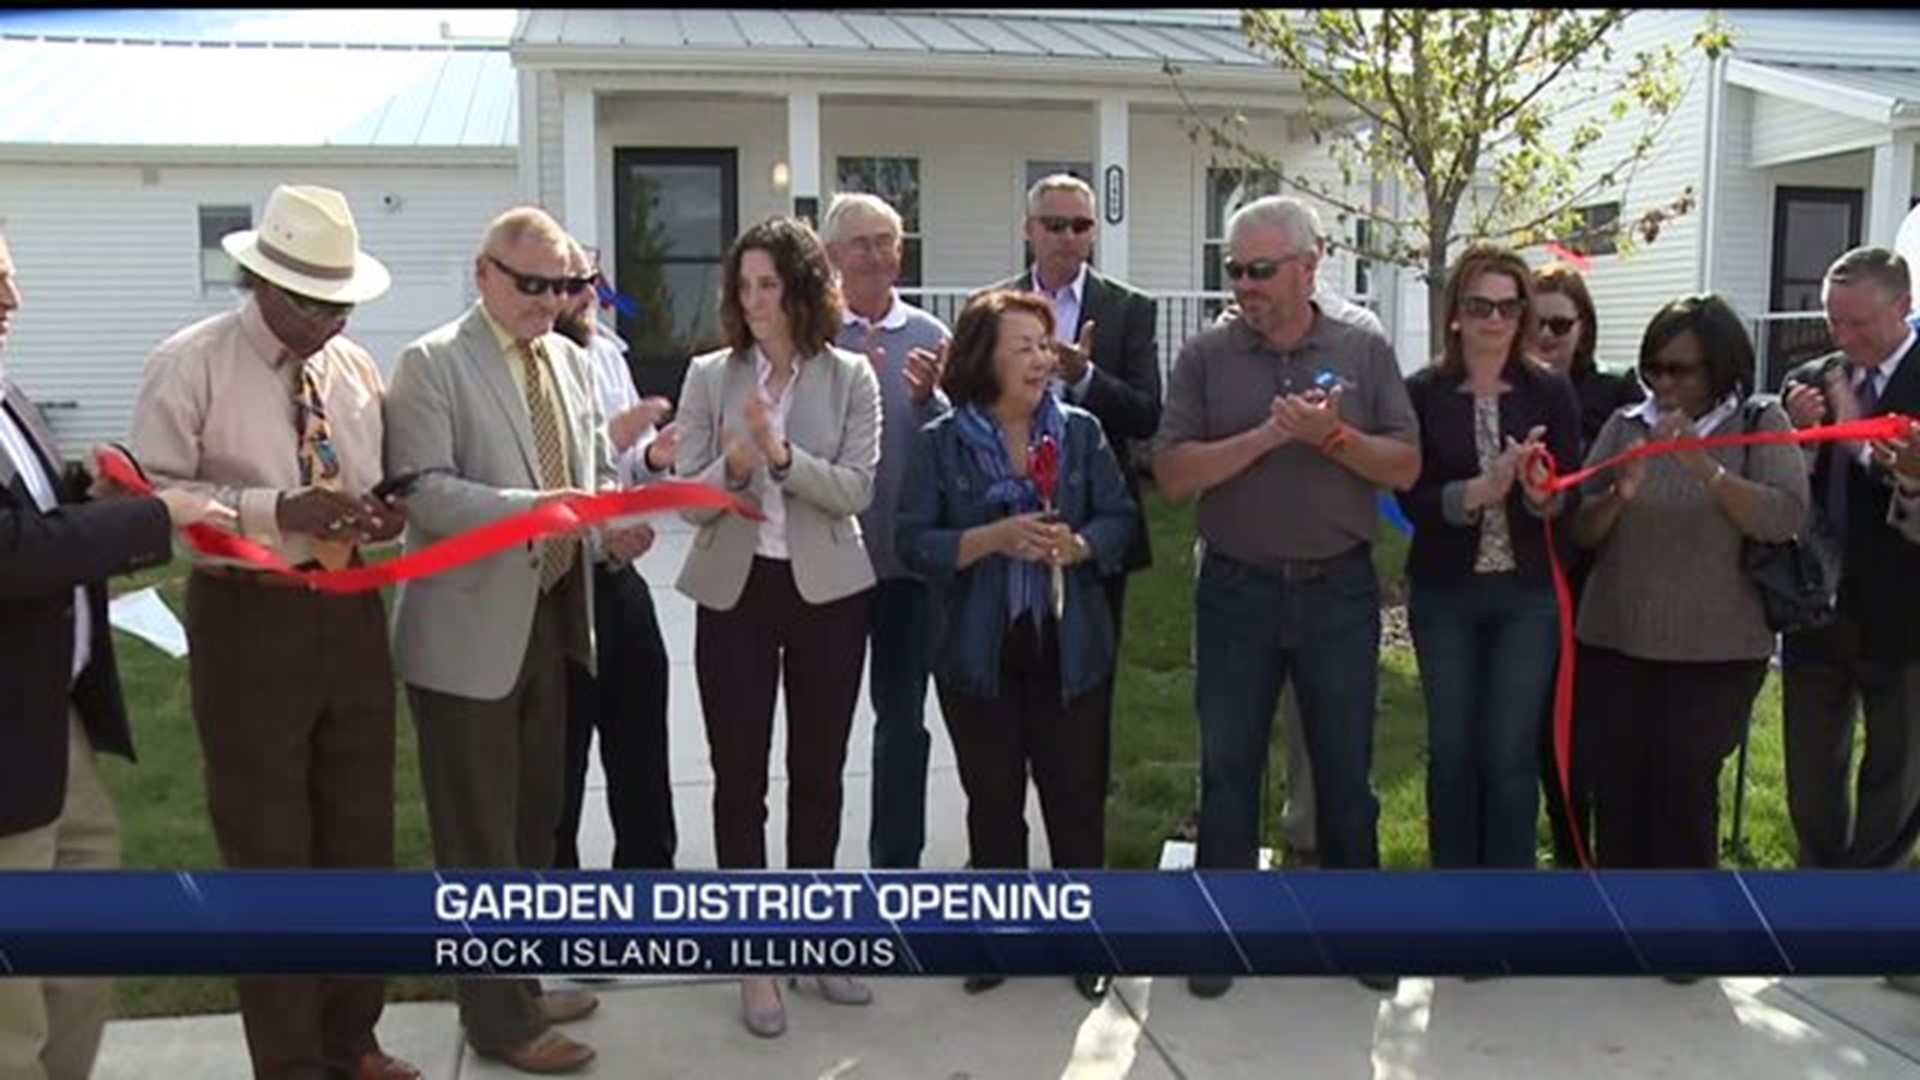 Garden District opens in Rock Island